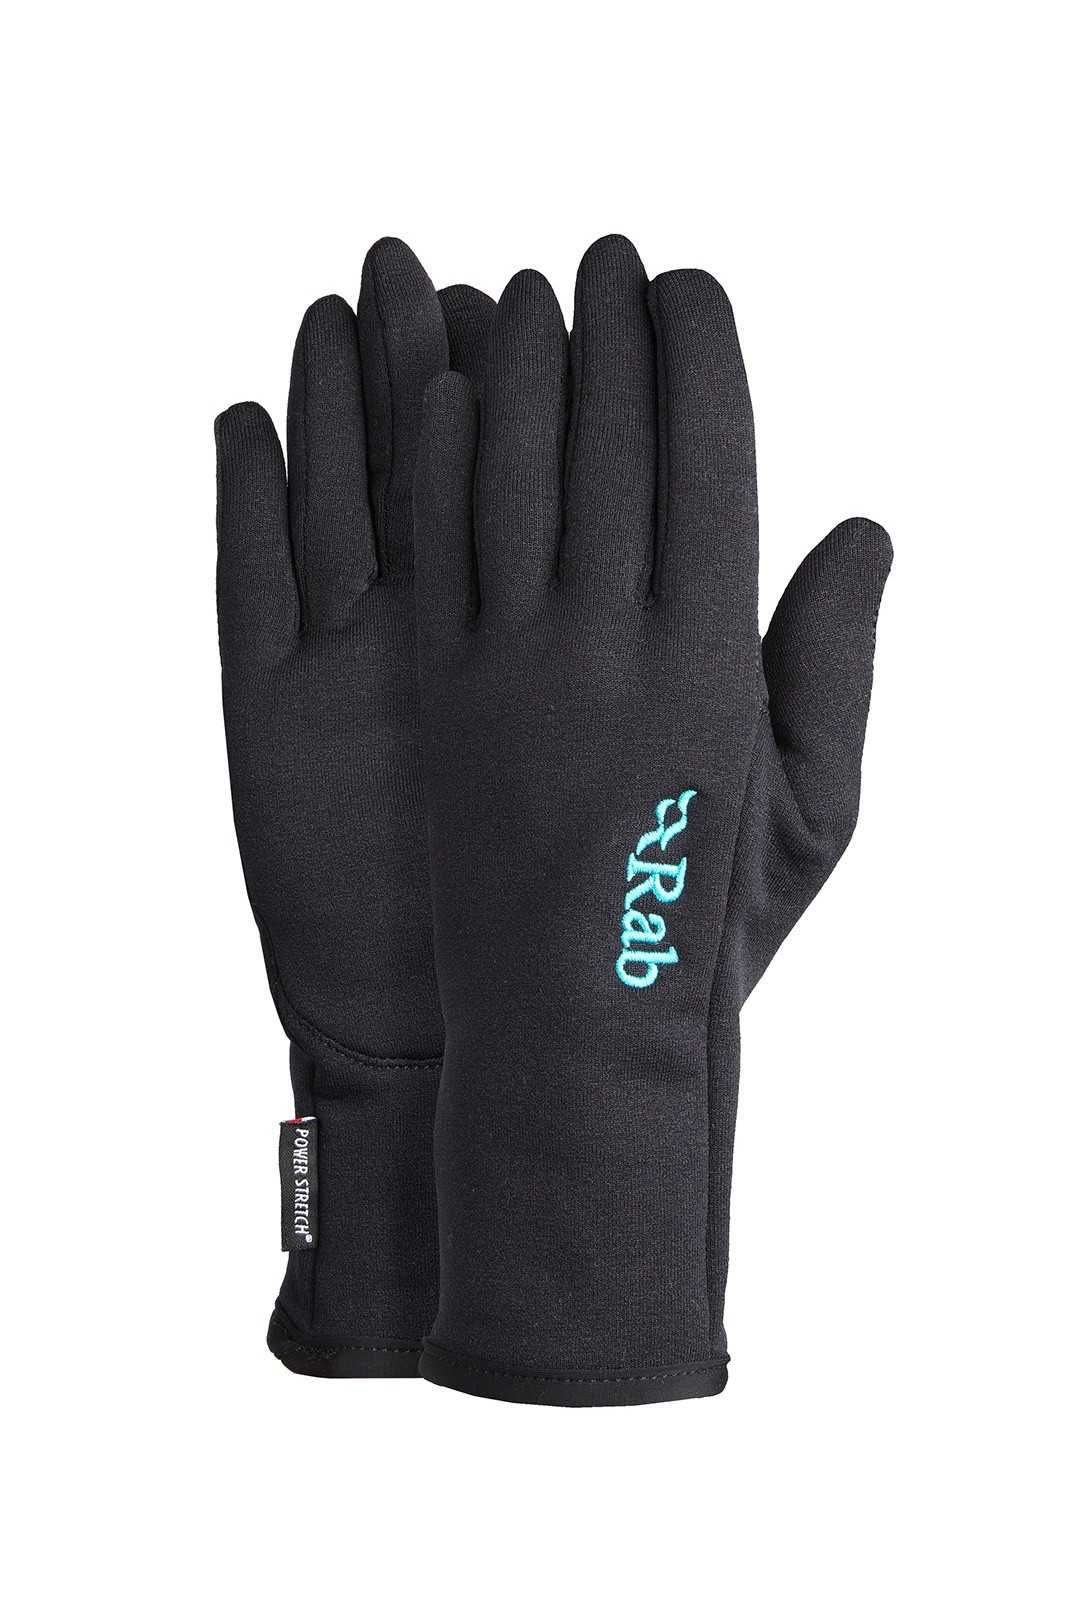 Rab Pro Glove Black